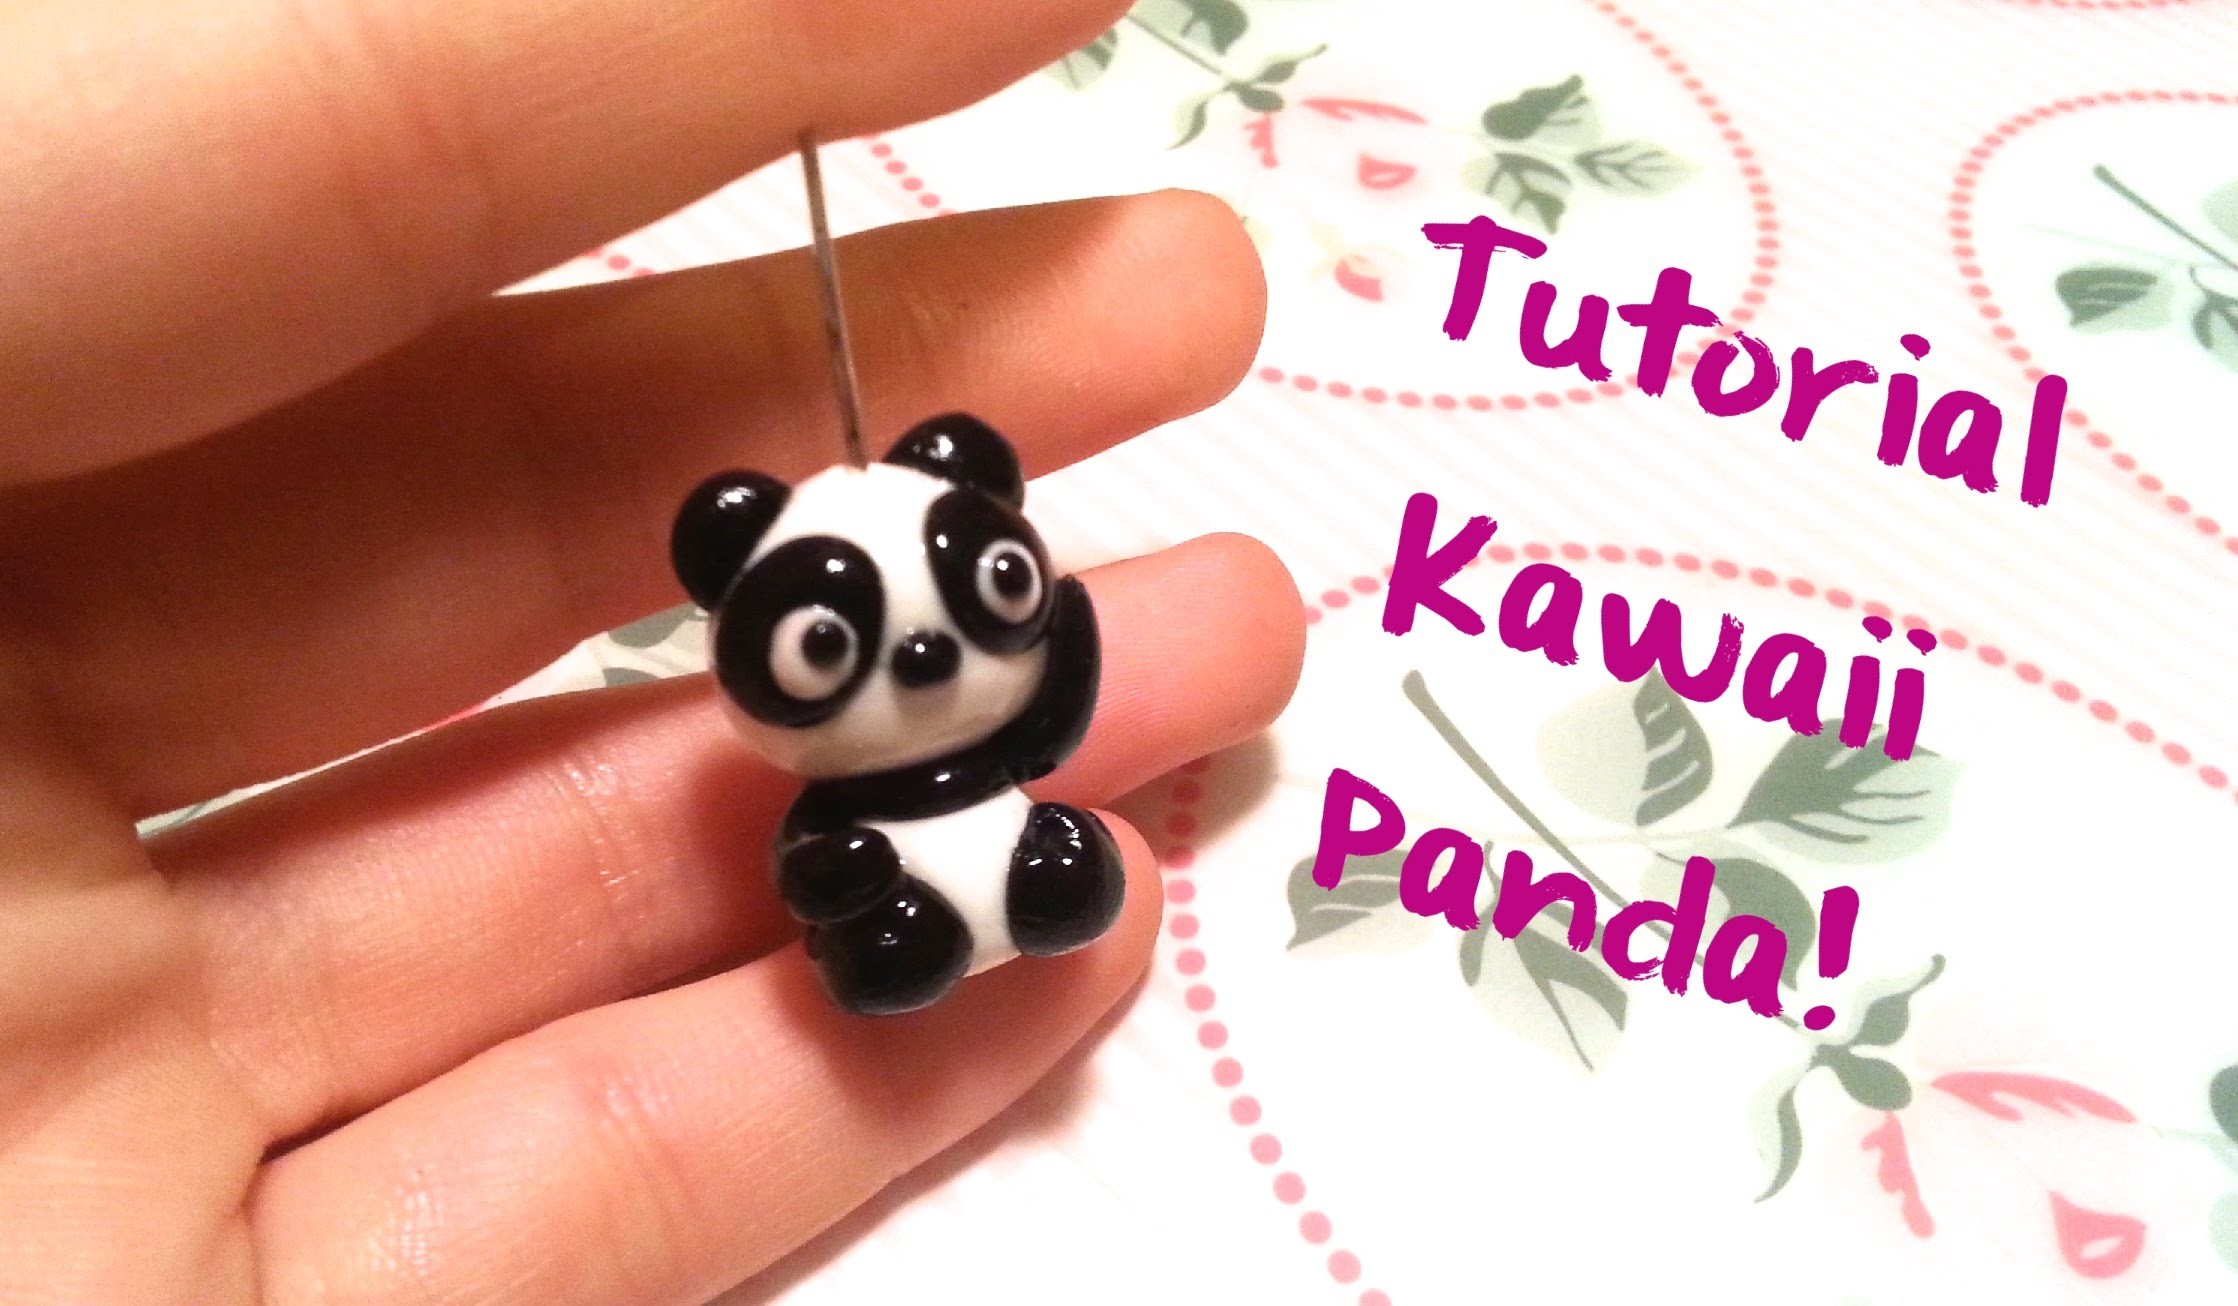 DIY Polymer Clay Tutorial: Kawaii Panda!